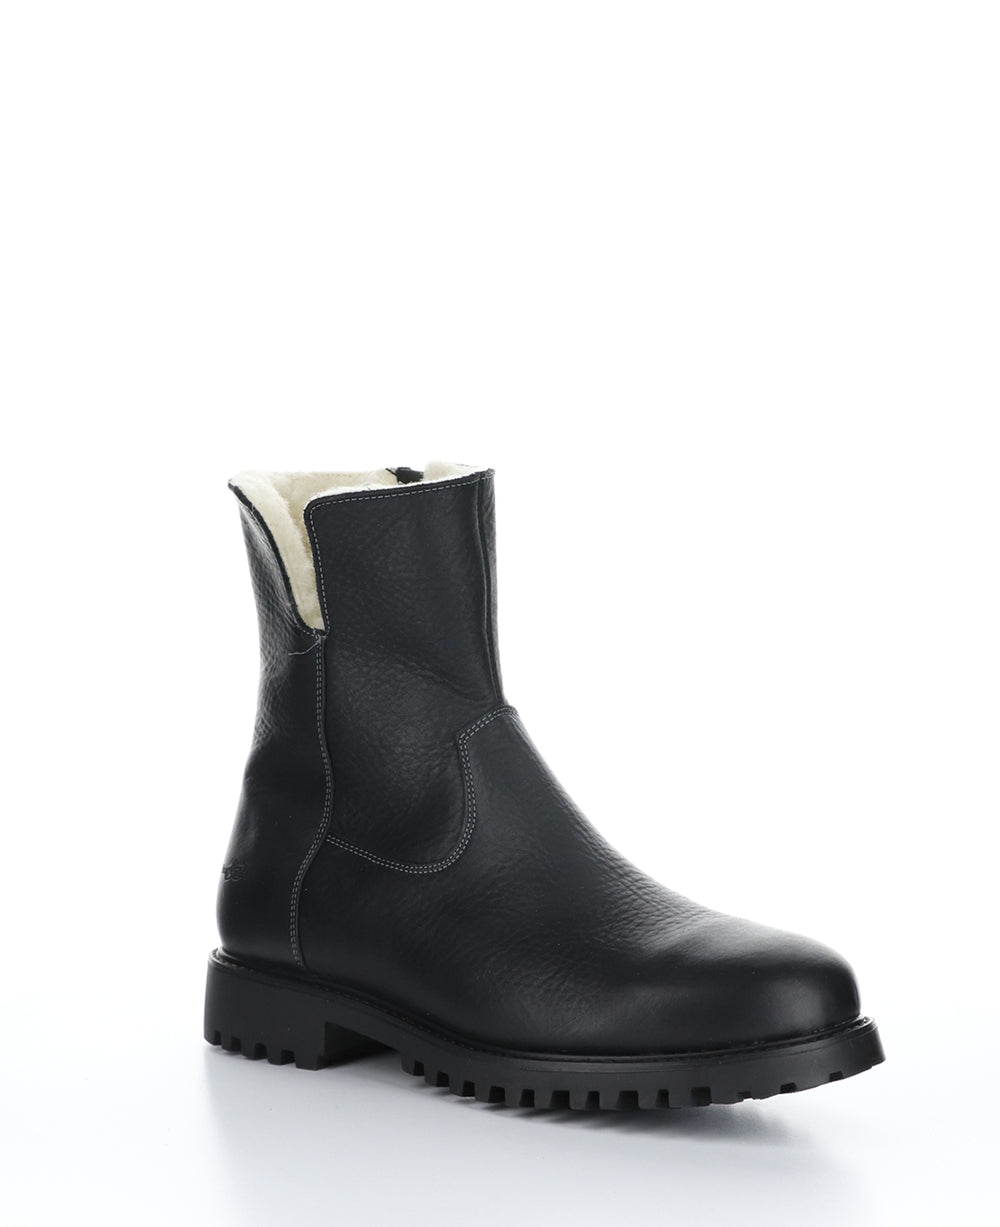 DEREK Black Zip Up Boots|DEREK Bottes avec Fermeture Zippée in Noir